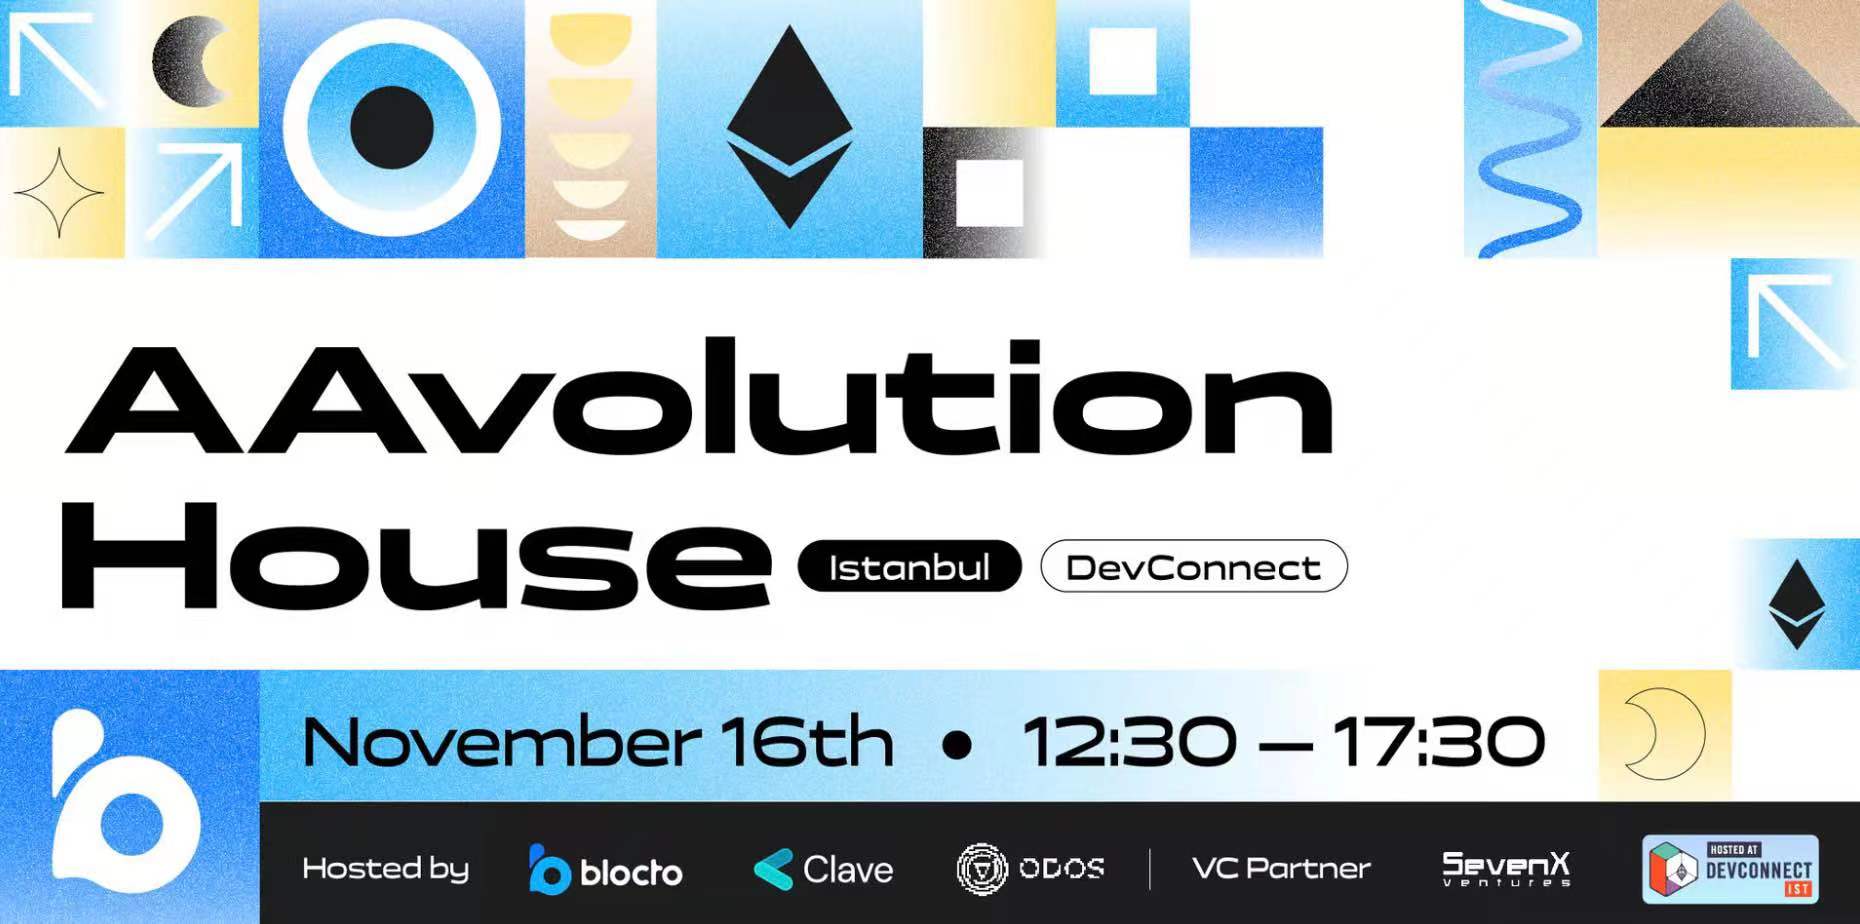 Blocto 将于 DevConnect 期间举办 AAvolution House Istanbul 